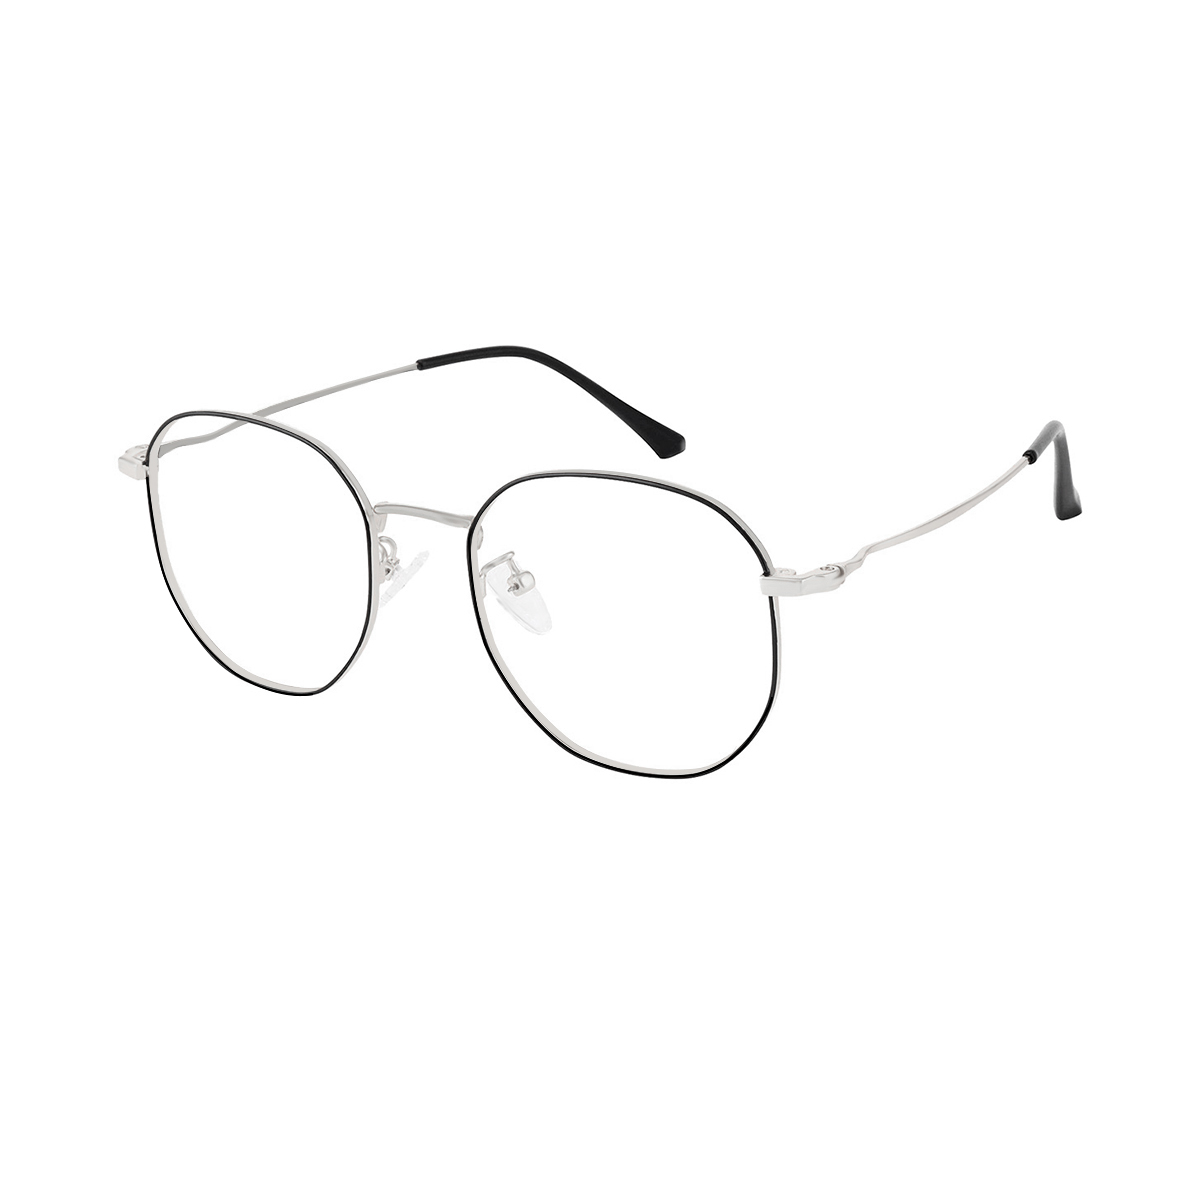 Amour - Geometric Black-Silver Reading Glasses for Men & Women